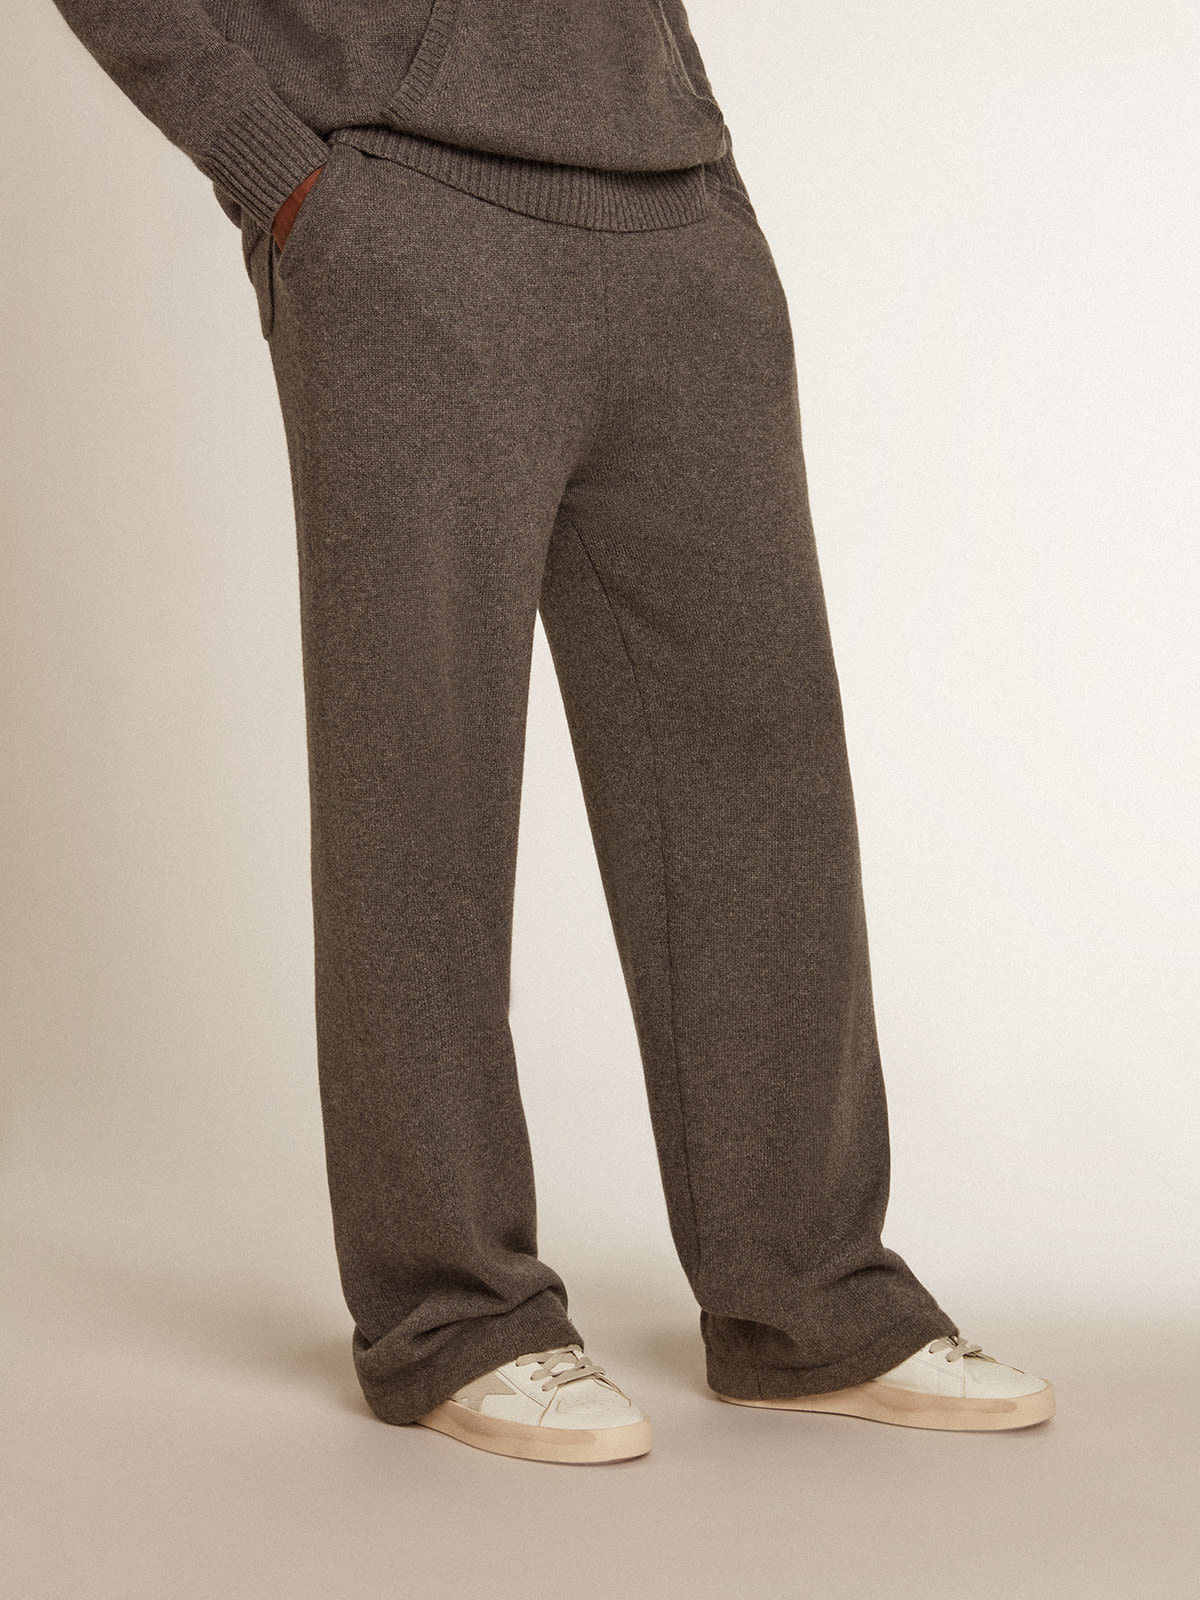 Golden Goose - Pantalone jogging uomo misto cashmere di colore grigio melange in 